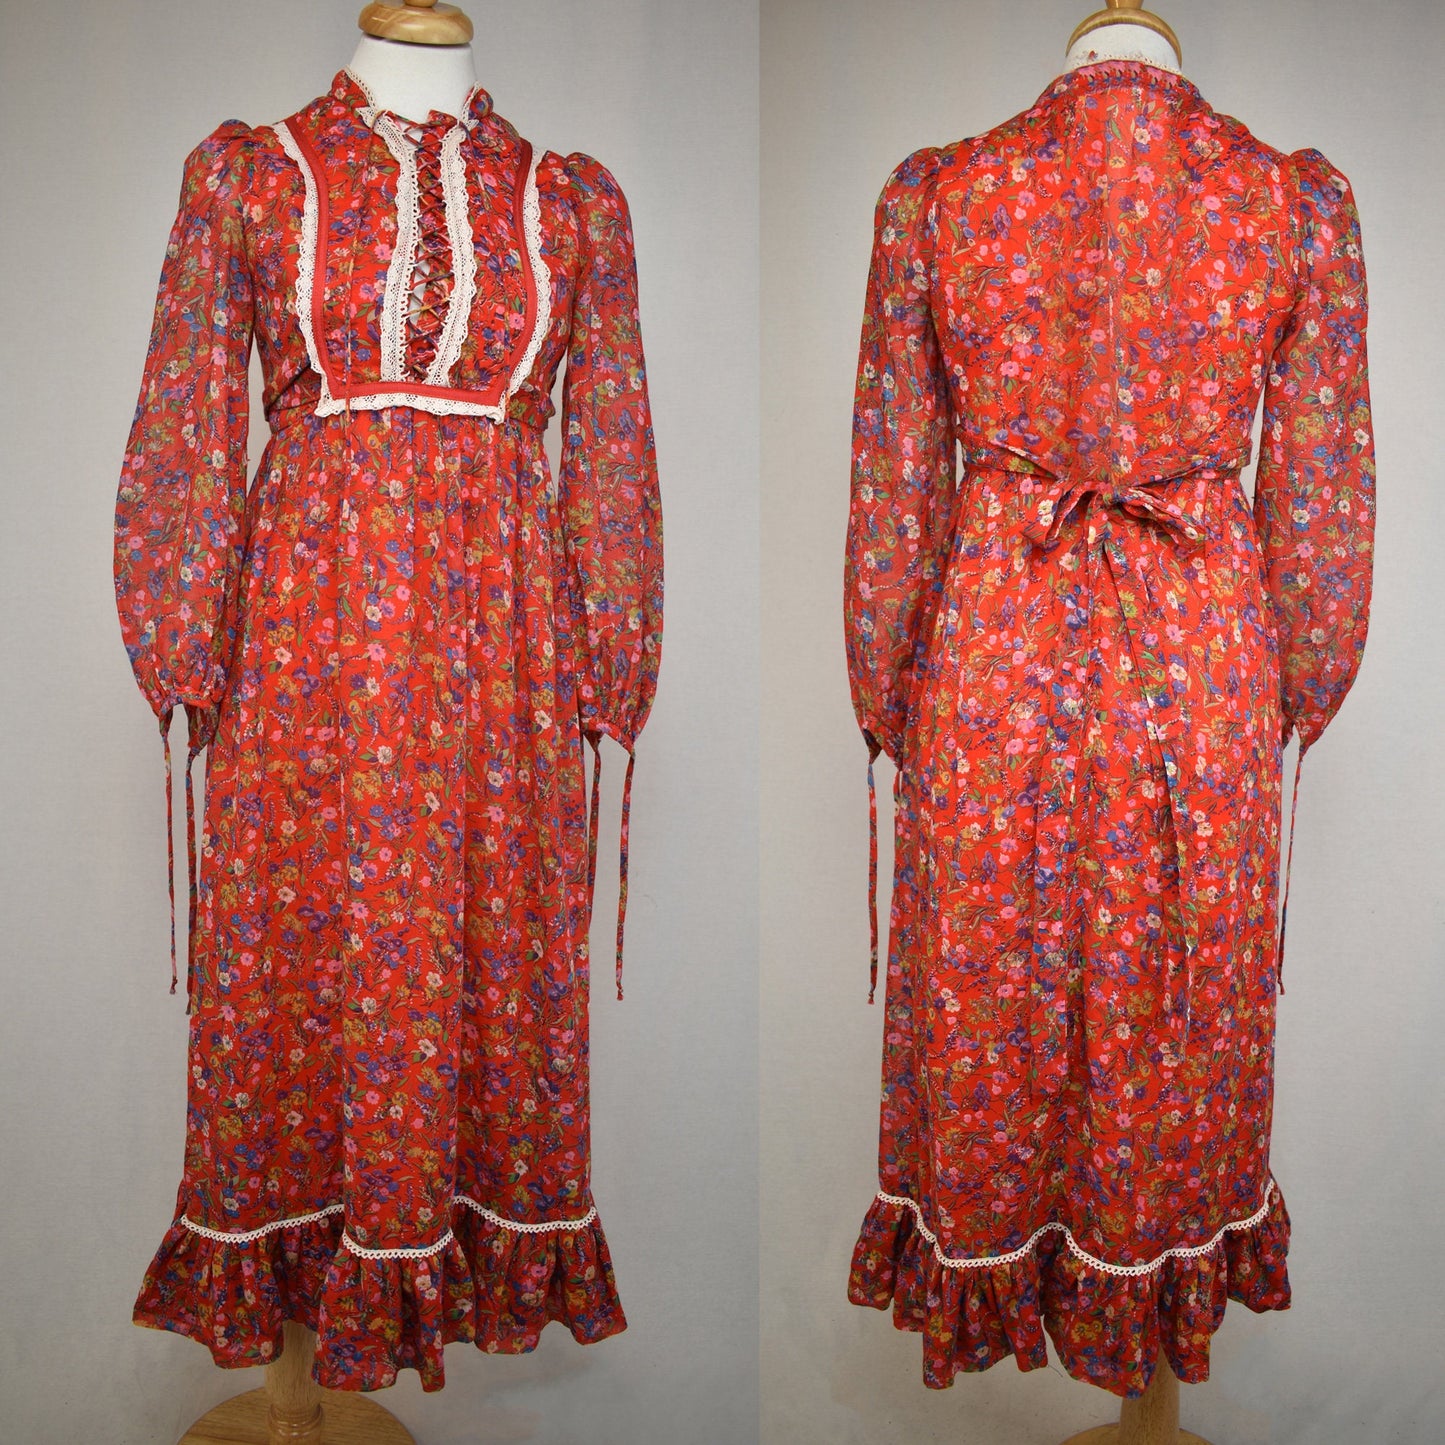 Vintage 70s Gunne Sax Style Dress by Candi Jones California - Red Calico Floral - Prairiecore - Sexy or Prim Neckline - You Decide